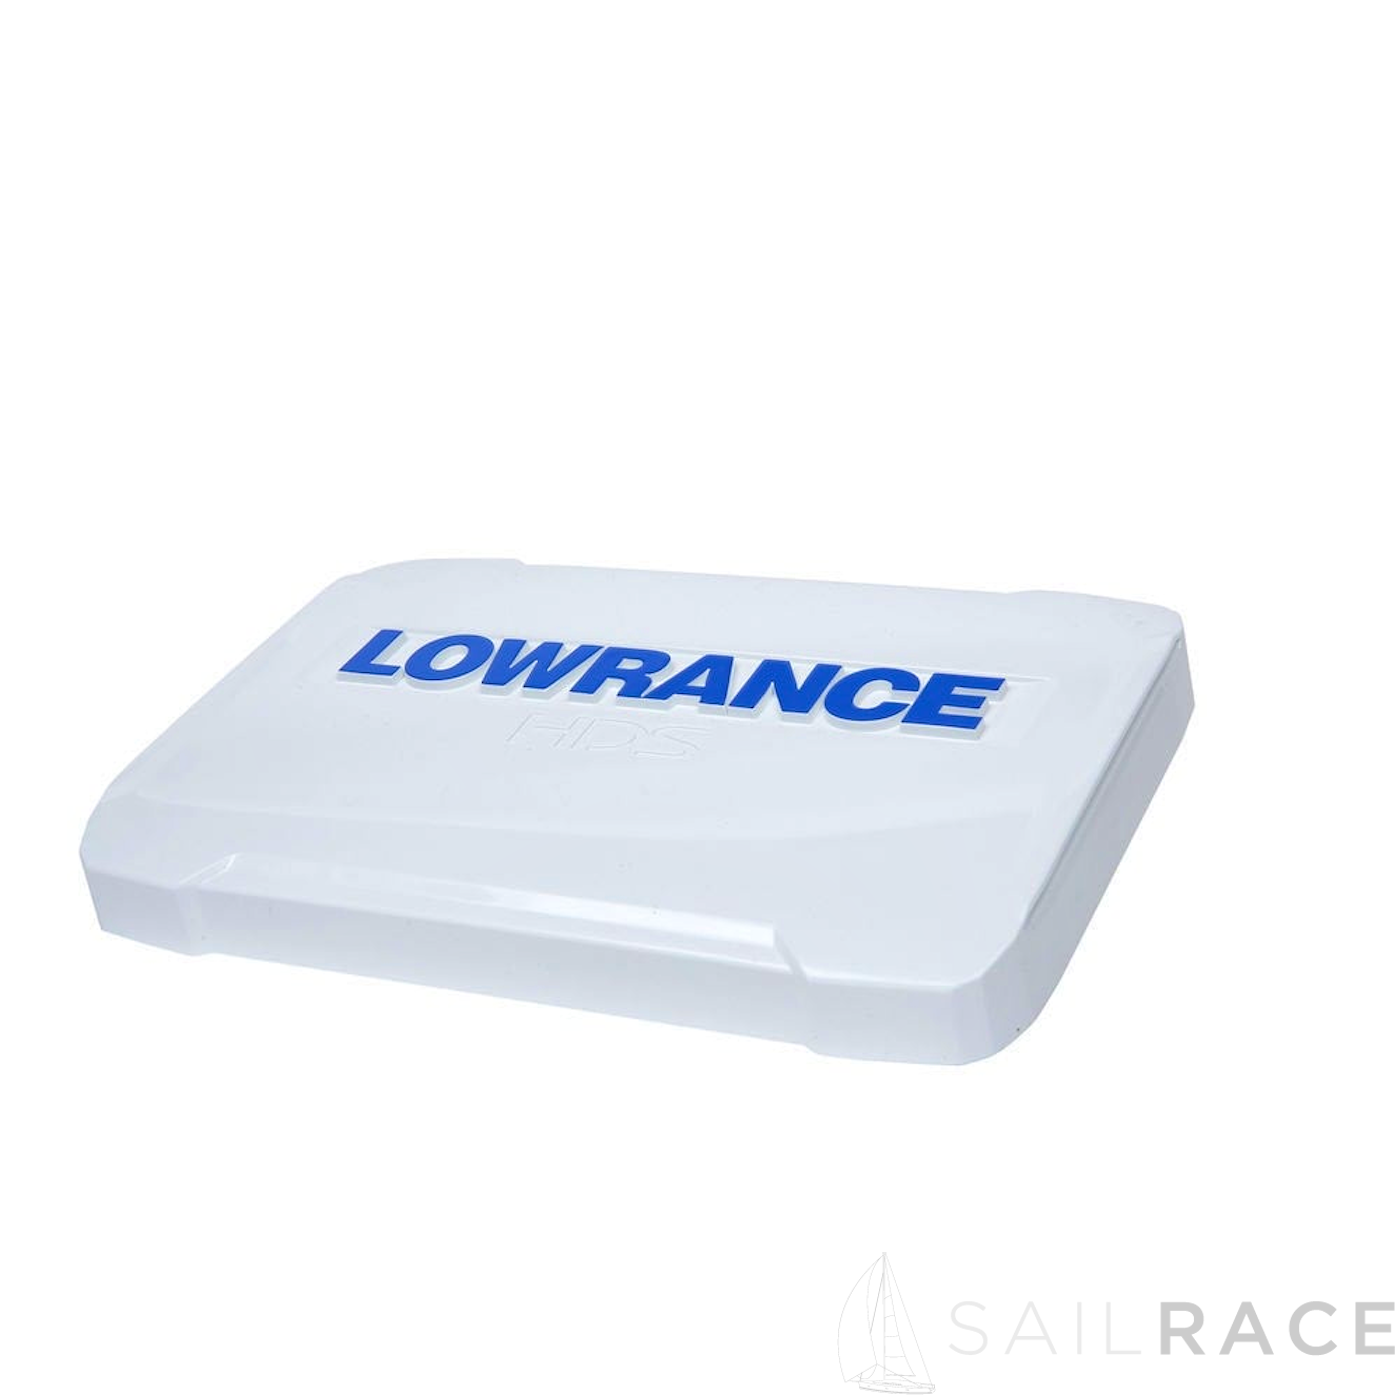 Lowrance HDS-7 GEN3 SUNCOVER - imagen 2